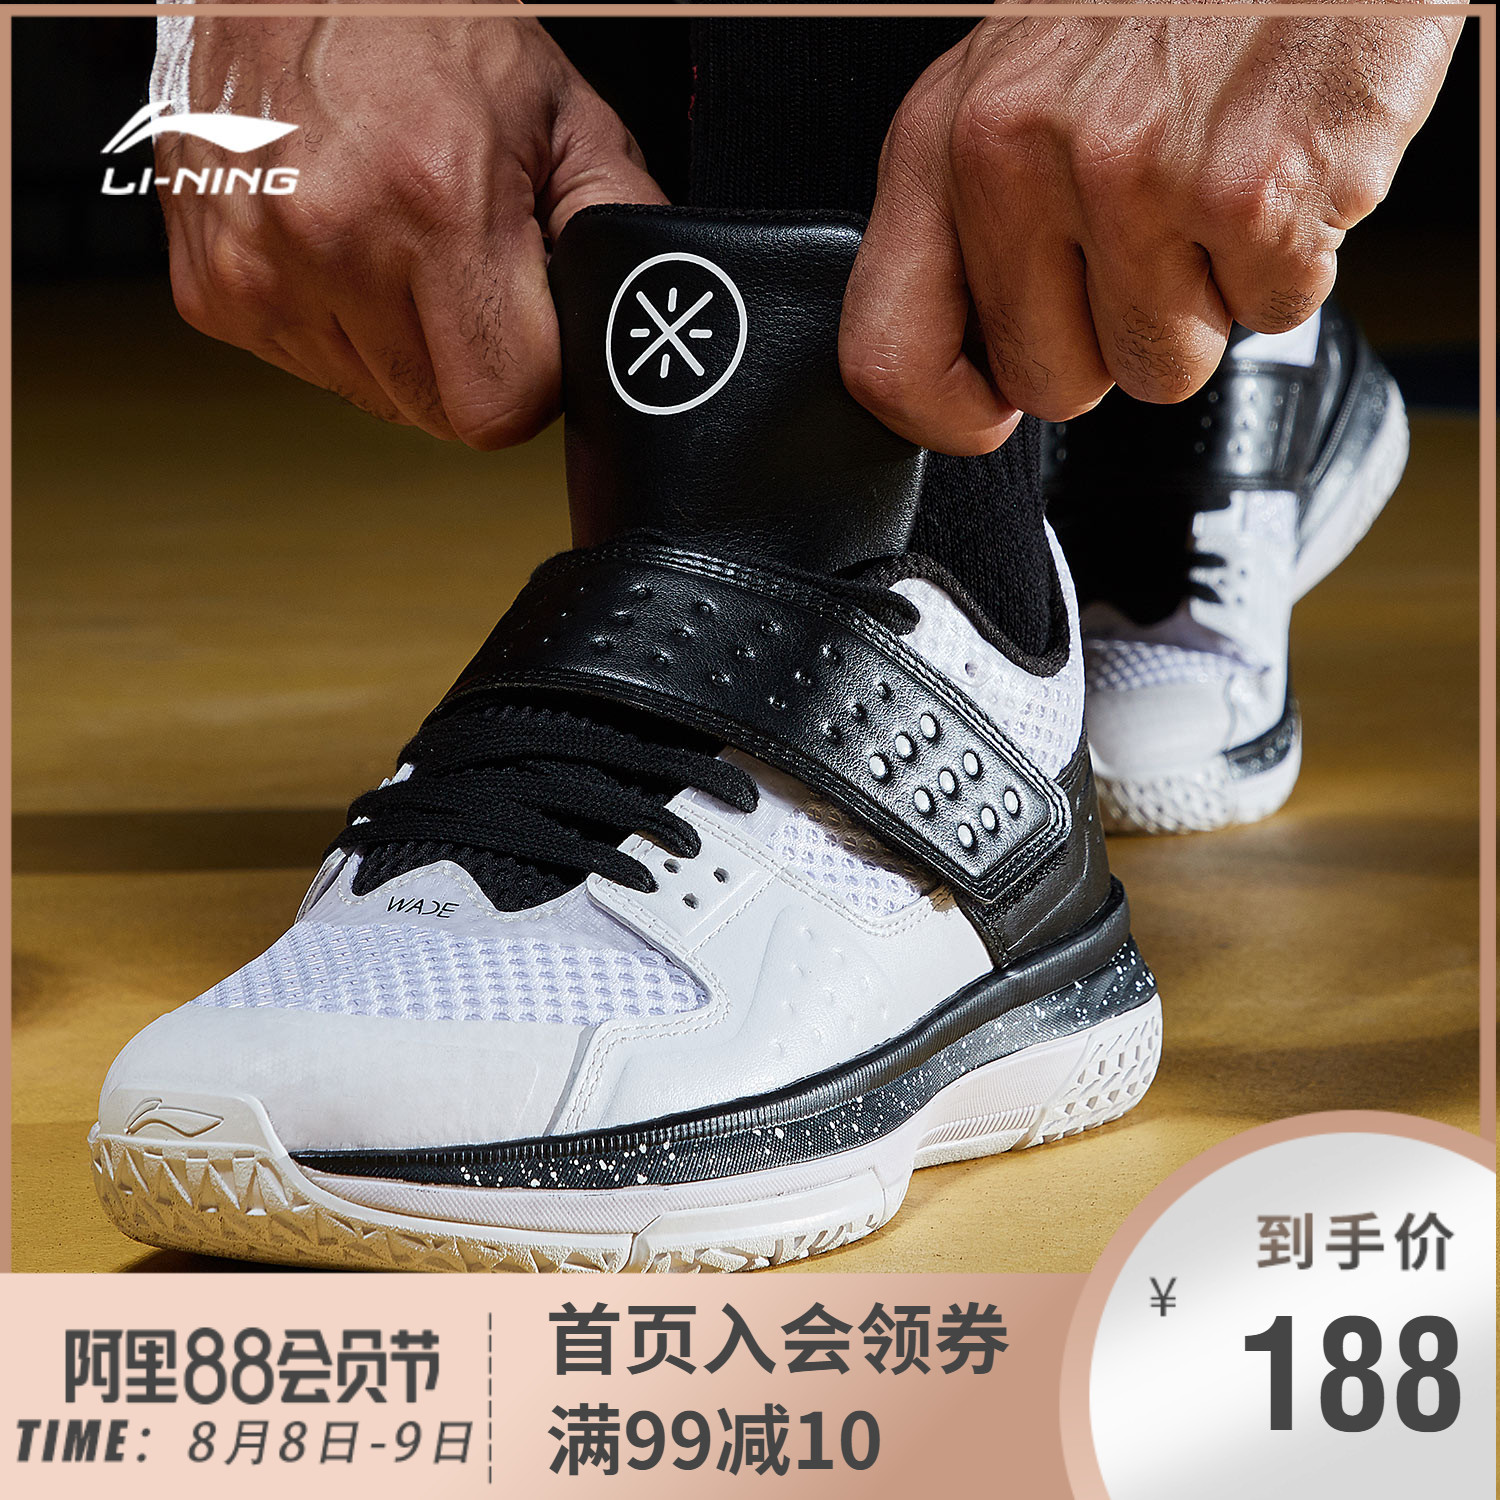 Li Ning Basketball Shoes Men's Shoes Combat Armor Breathable, Anti slip, Durable Practical Football Shoes Summer Low Top Combat Boots Sports Shoes Men's